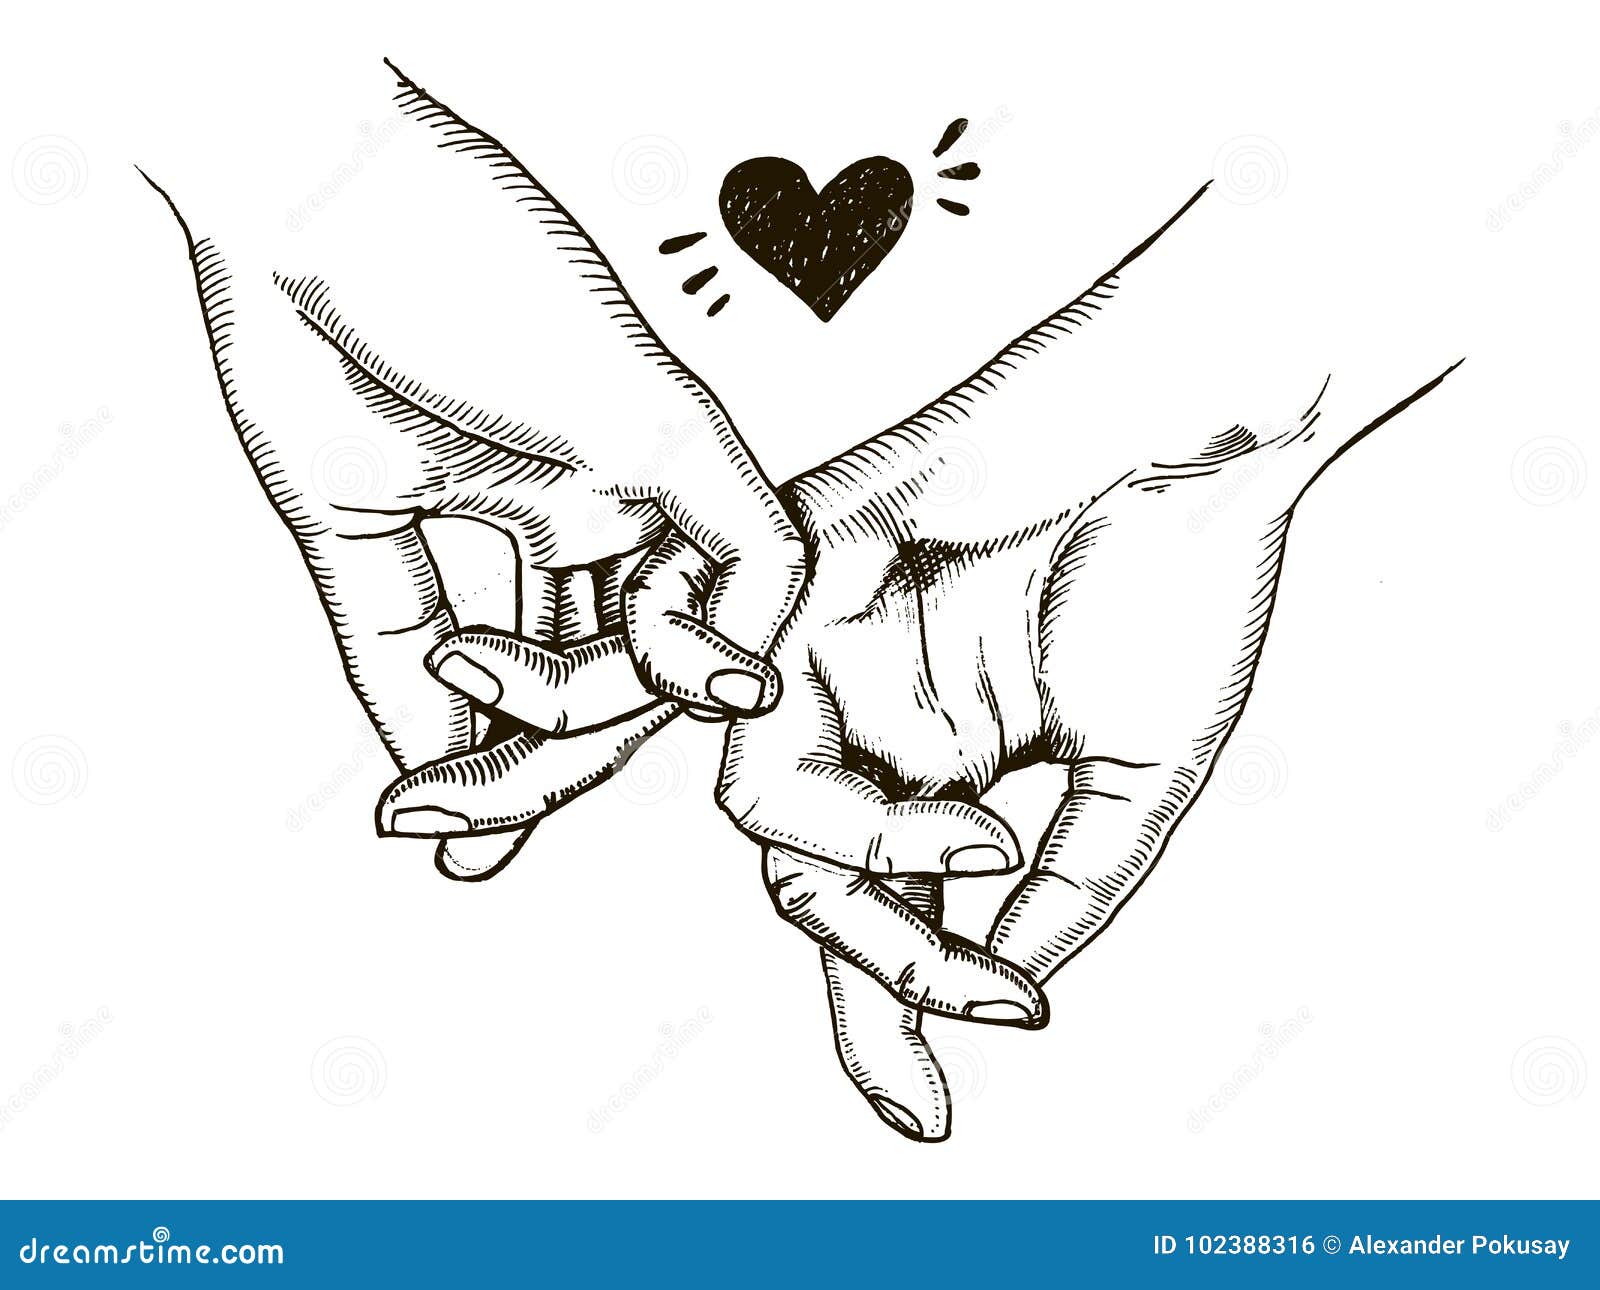 Couple Holding Hands Wedding: Over 11,031 Royalty-Free Licensable Stock  Vectors & Vector Art | Shutterstock